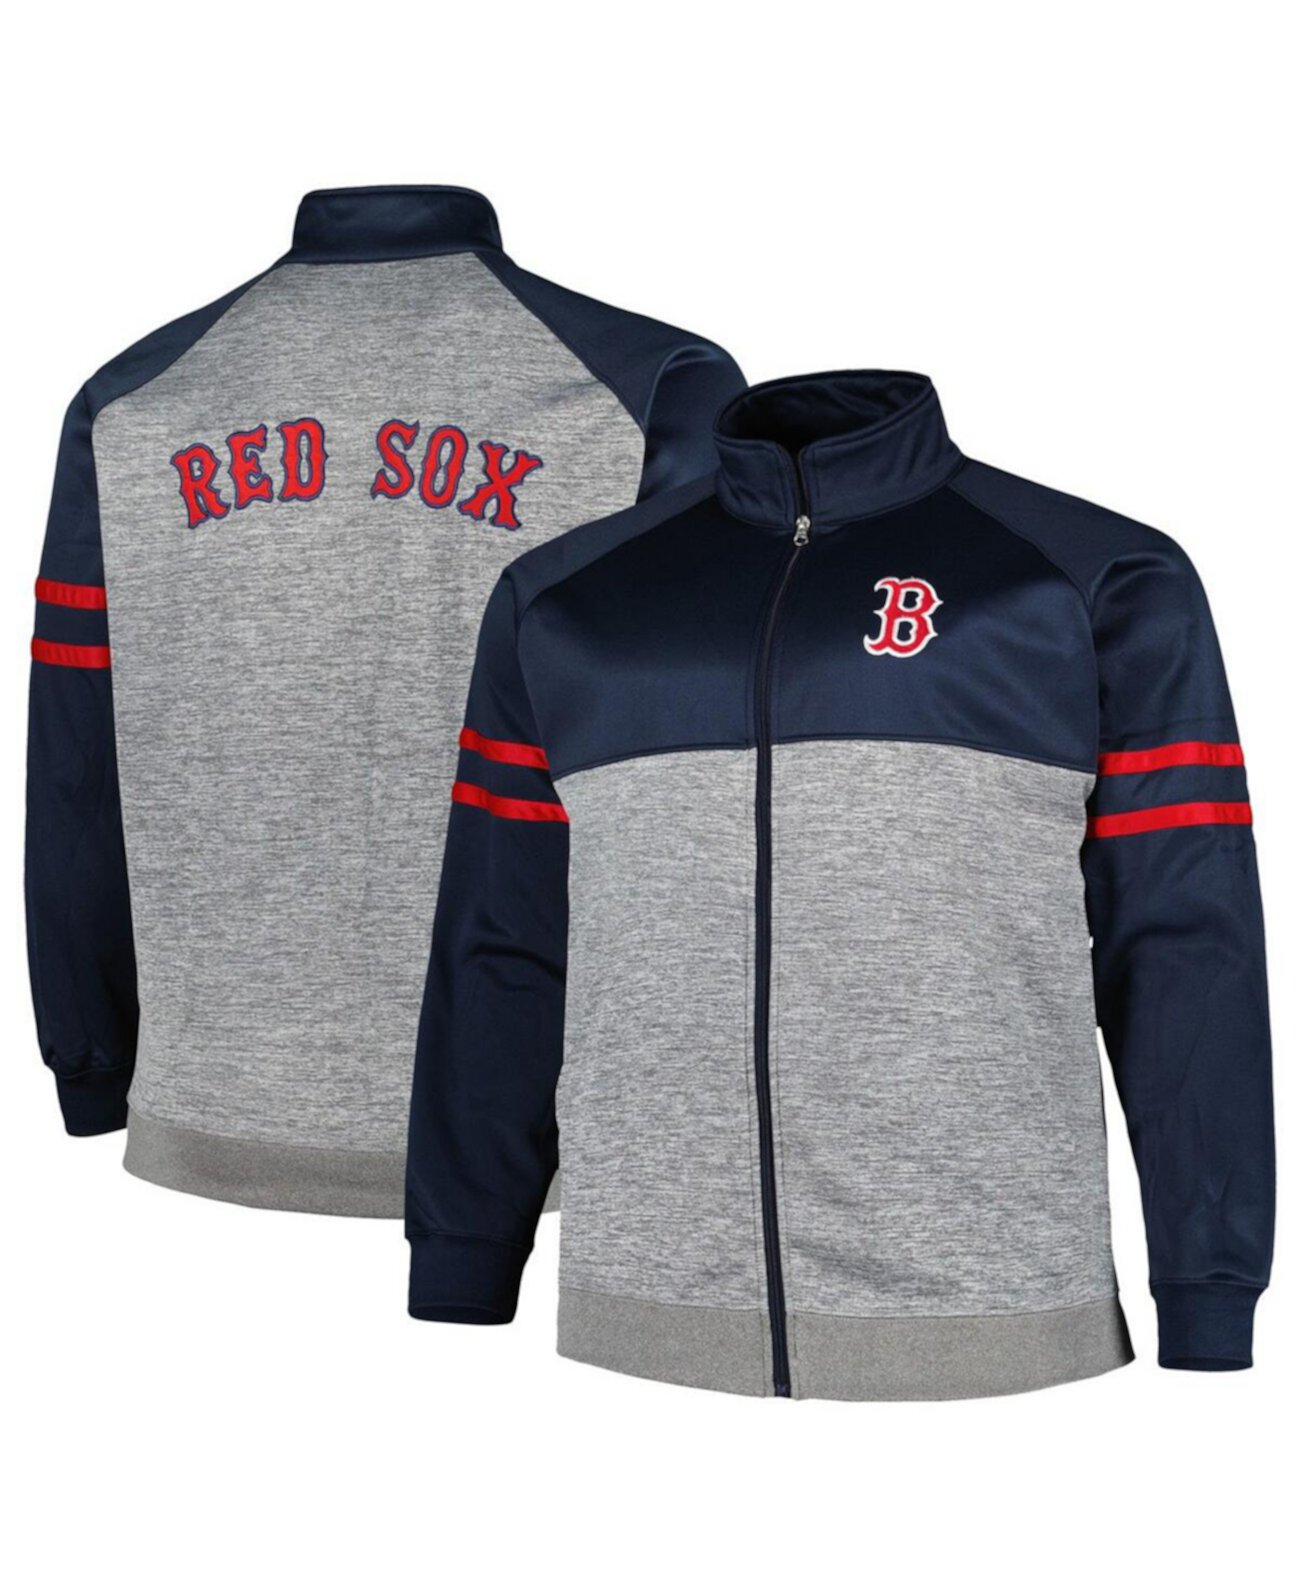 Мужская спортивная куртка темно-синего цвета с молнией во всю длину реглан Boston Red Sox темно-серого цвета Profile